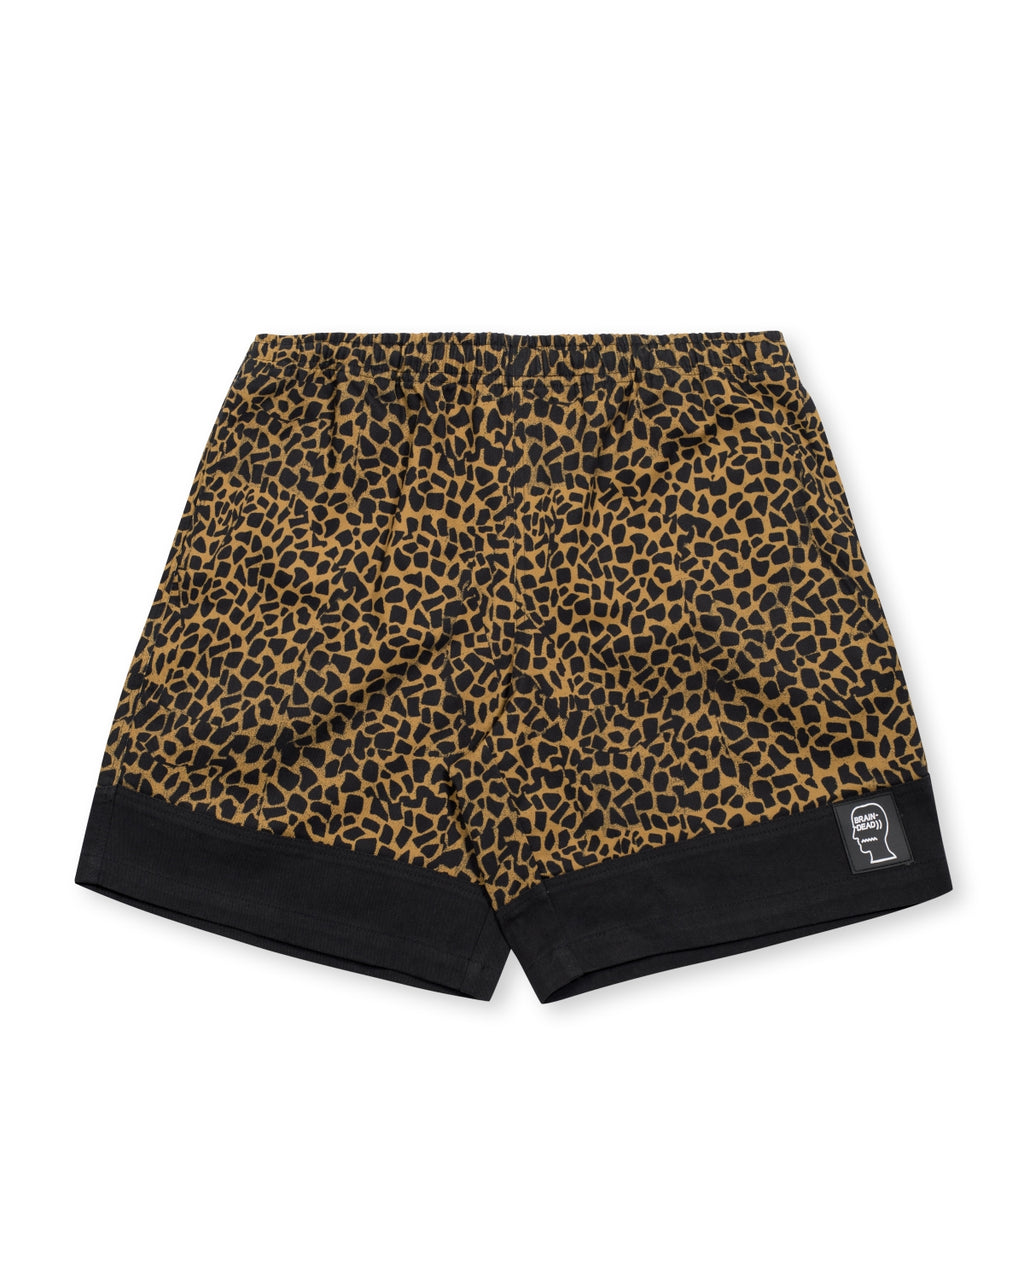 Paneled Leopard Dress Short - Leopard / Black